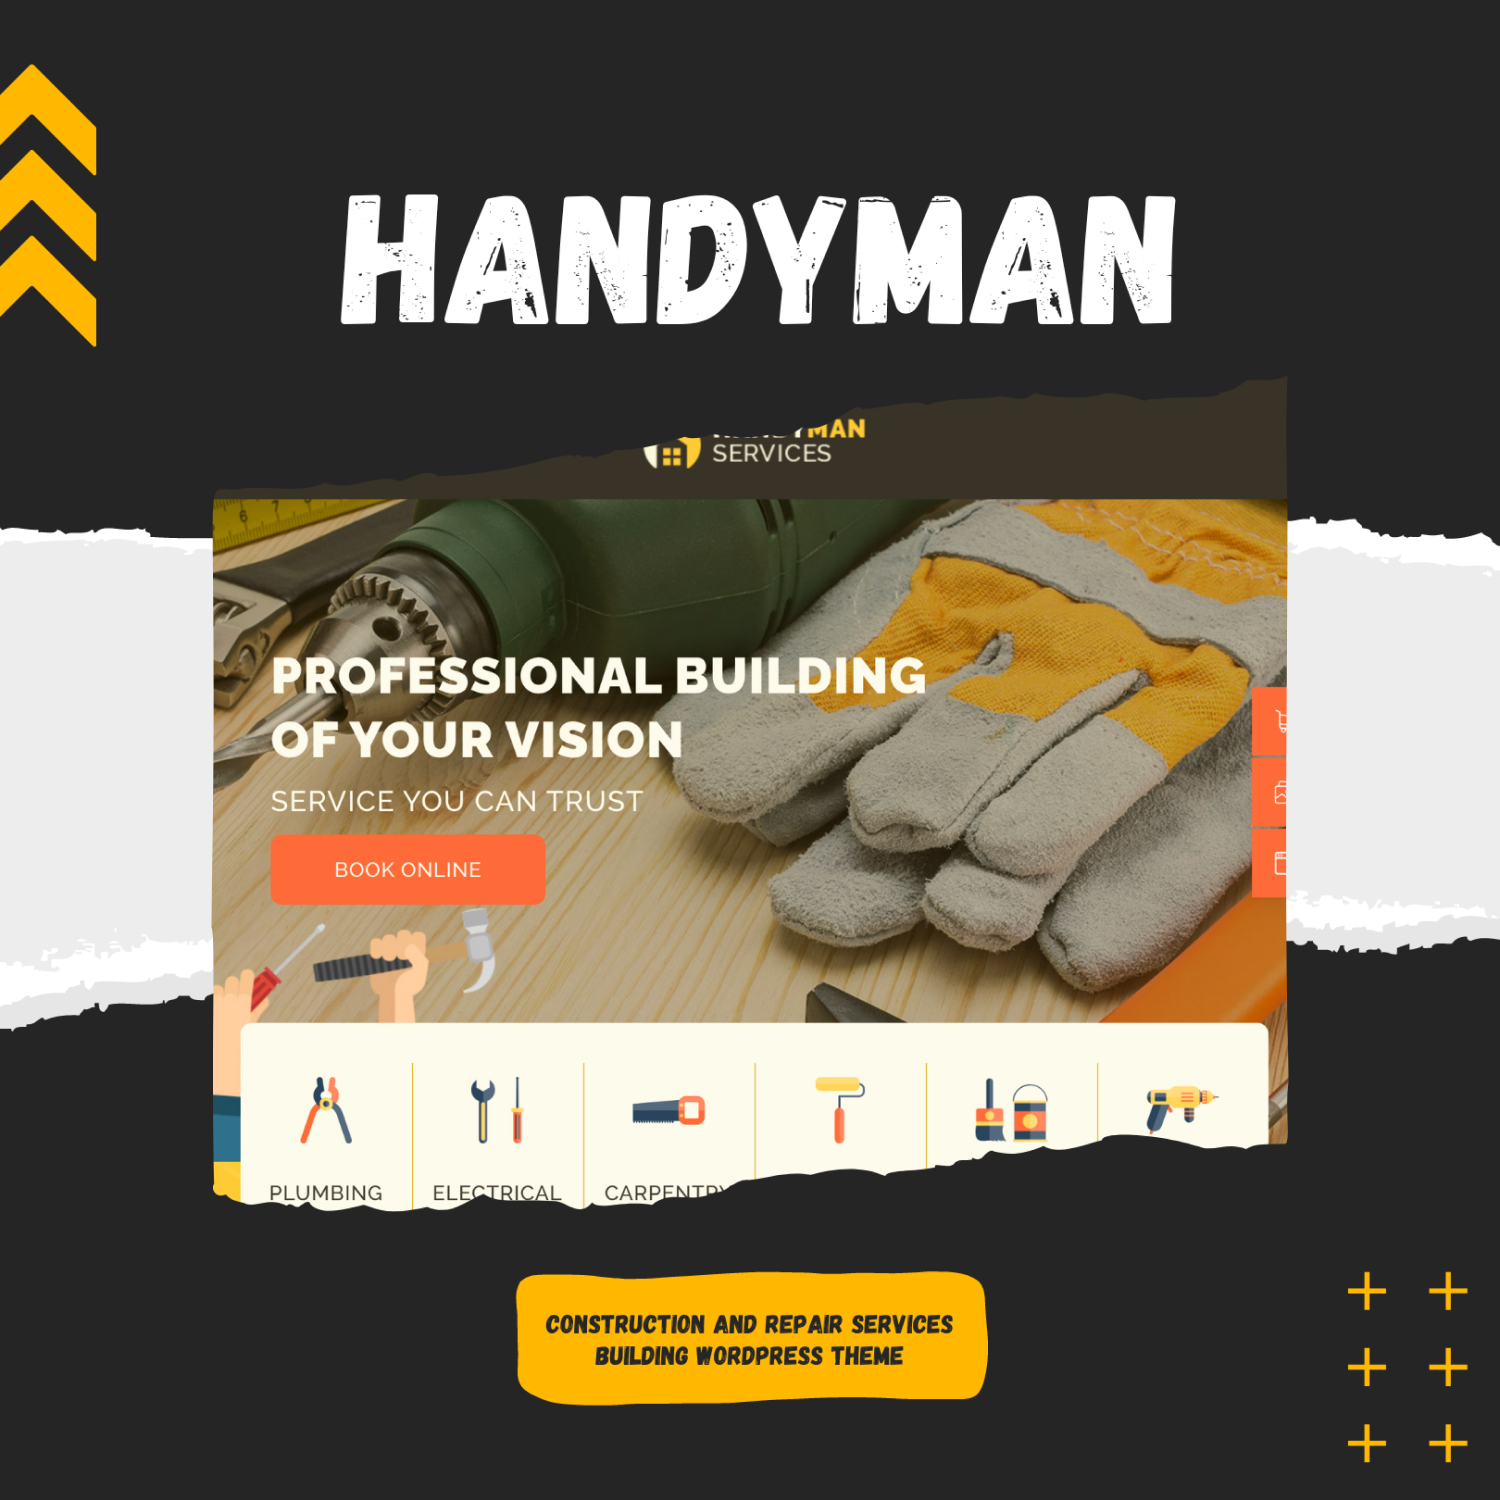 Handyman | Construction And Repair Services Building WordPress Theme.